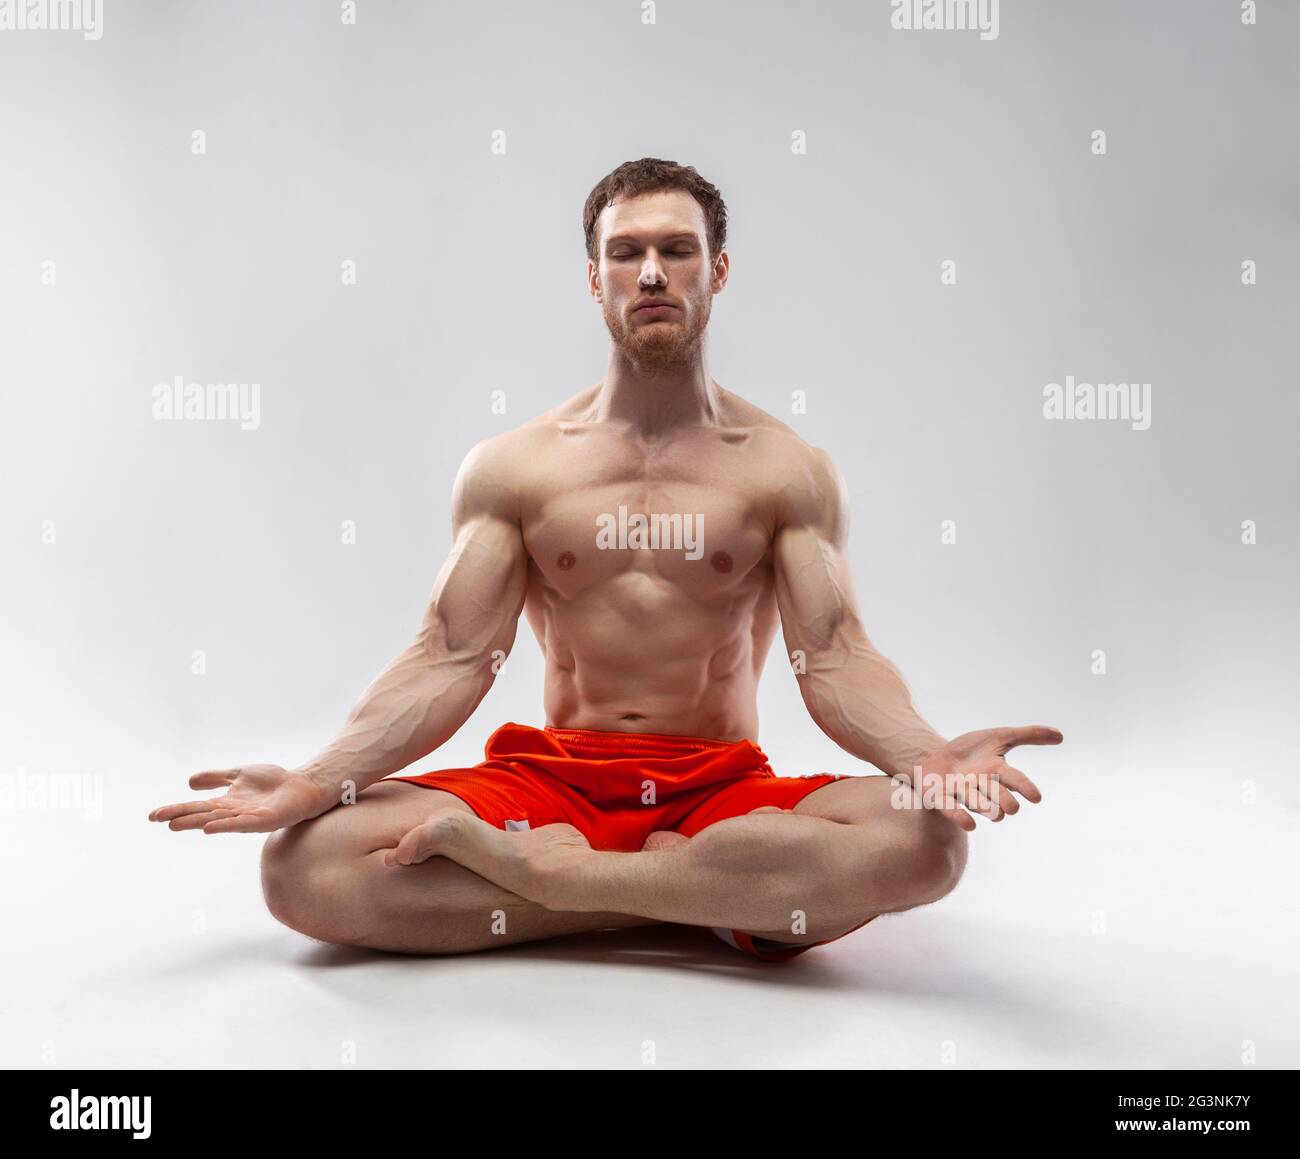 Yogi Man Practicing Yoga on Fitness Ball in Lotus Pose Stock Image - Image  of exercising, alone: 101234213